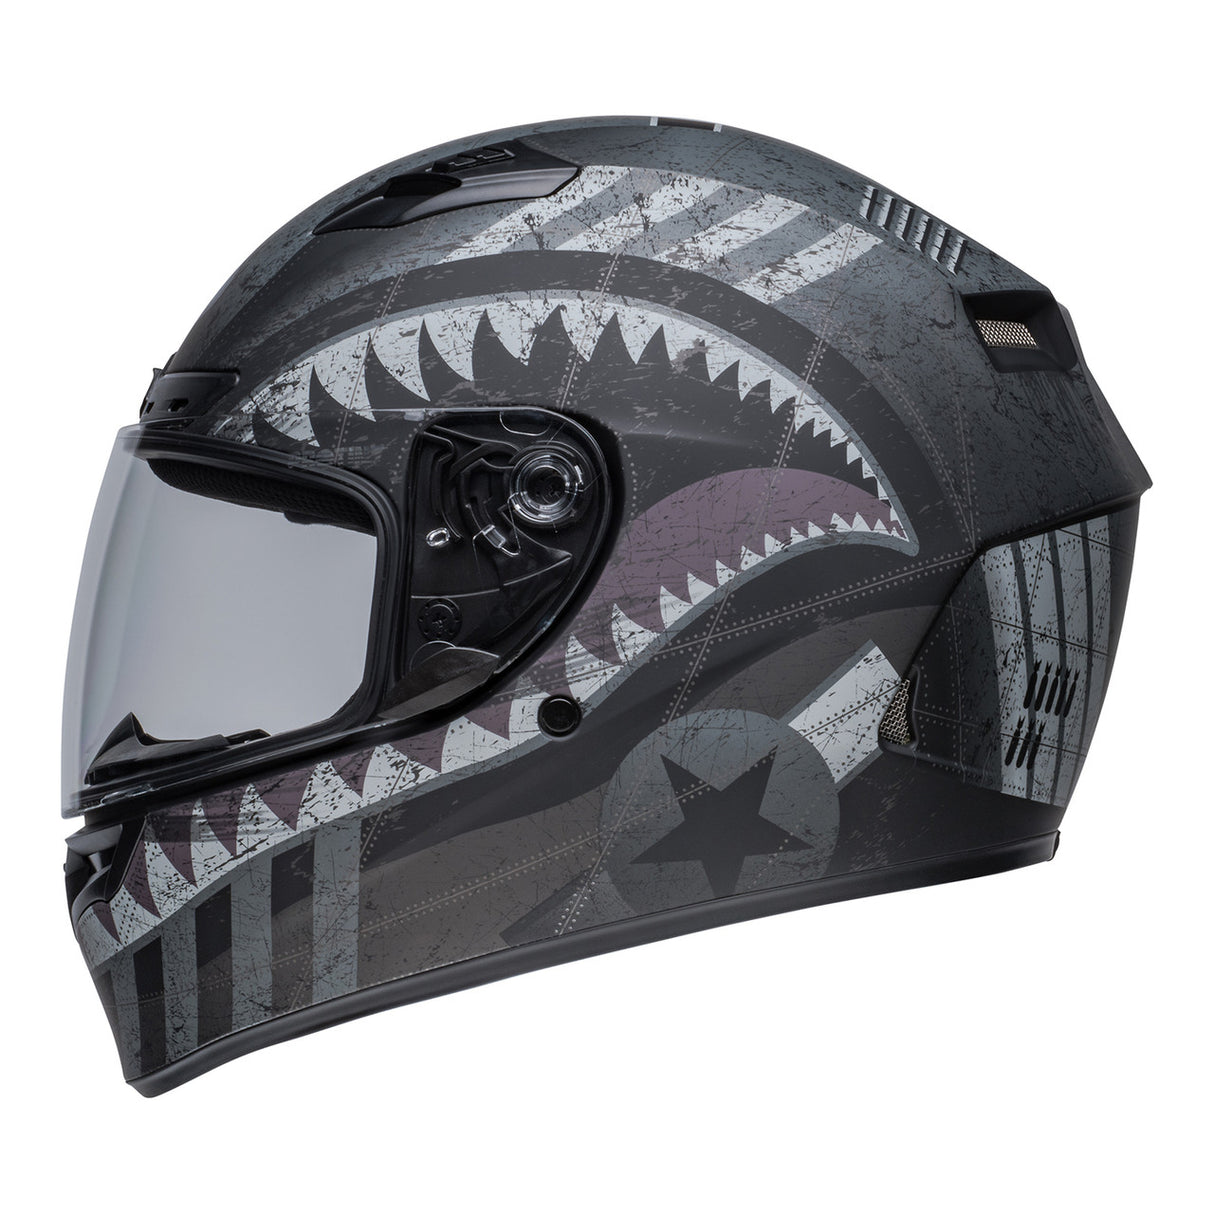 Bell Qualifier DLX MIPS Helmet - Dmc Matt Black/Grey